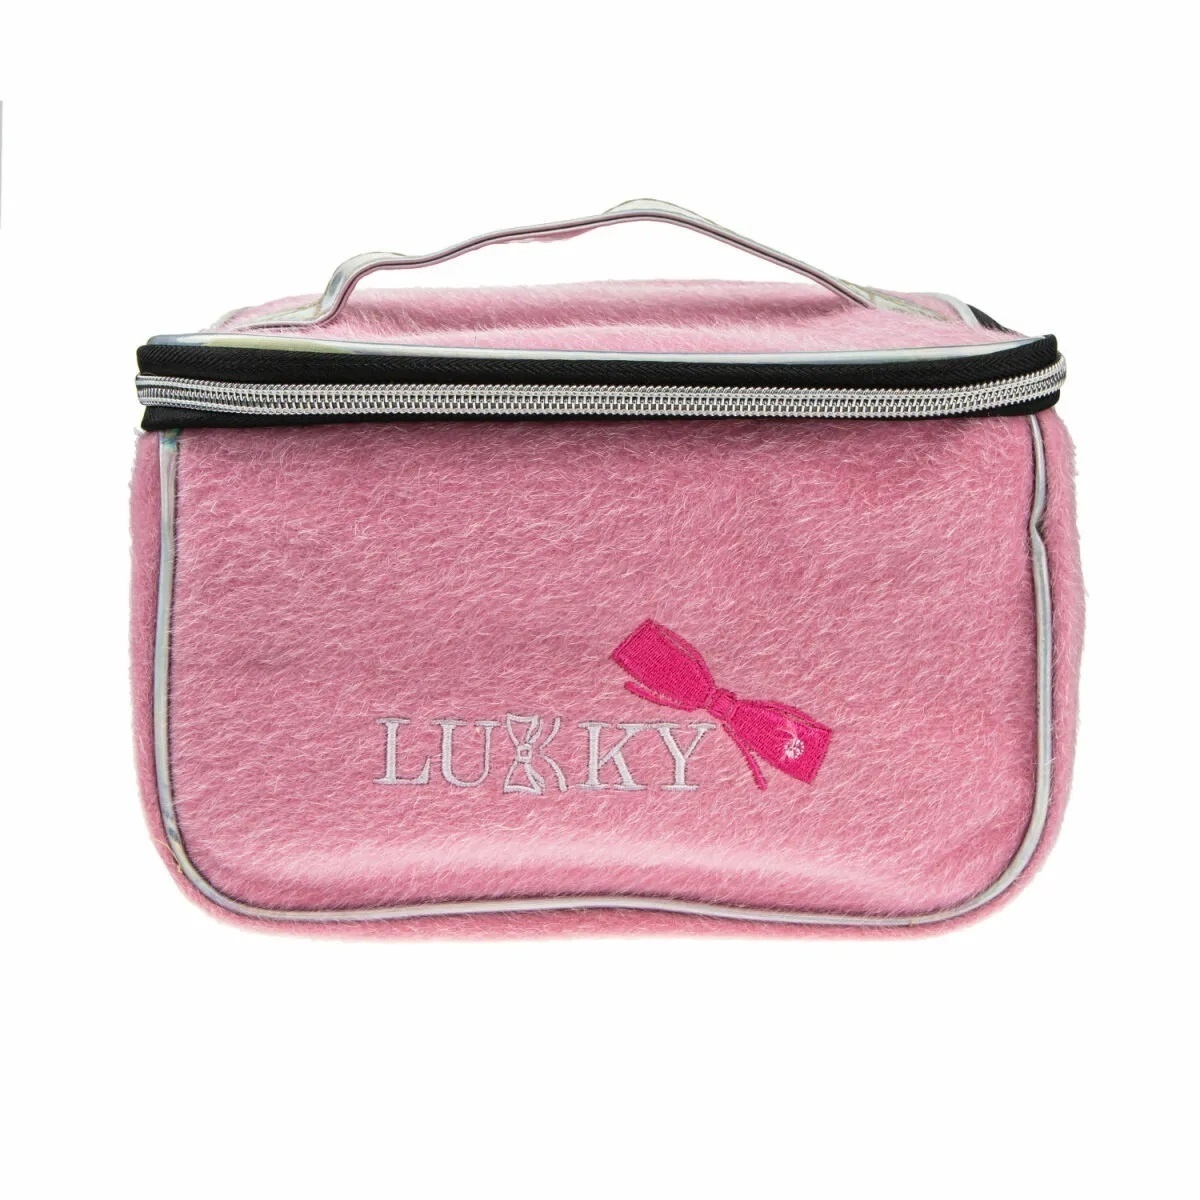 Lukky Т21413 Косметичка-чемоданчик с лого розовая 23*16*13см - Санкт-Петербург 